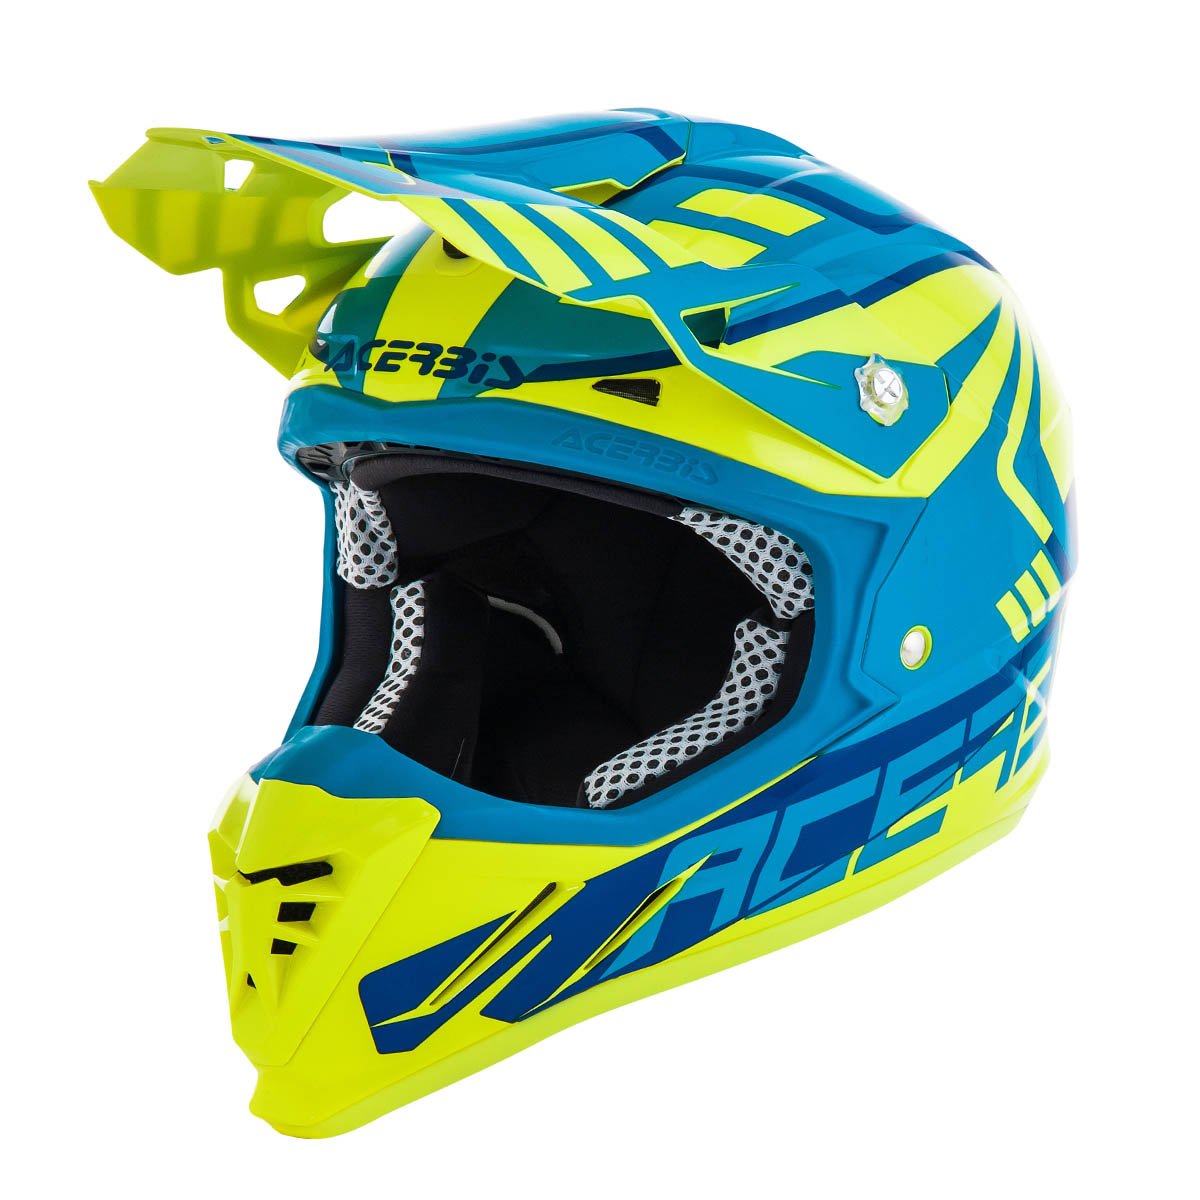 Acerbis Helmet Profile 3.0 S Fluo Yellow/Blue